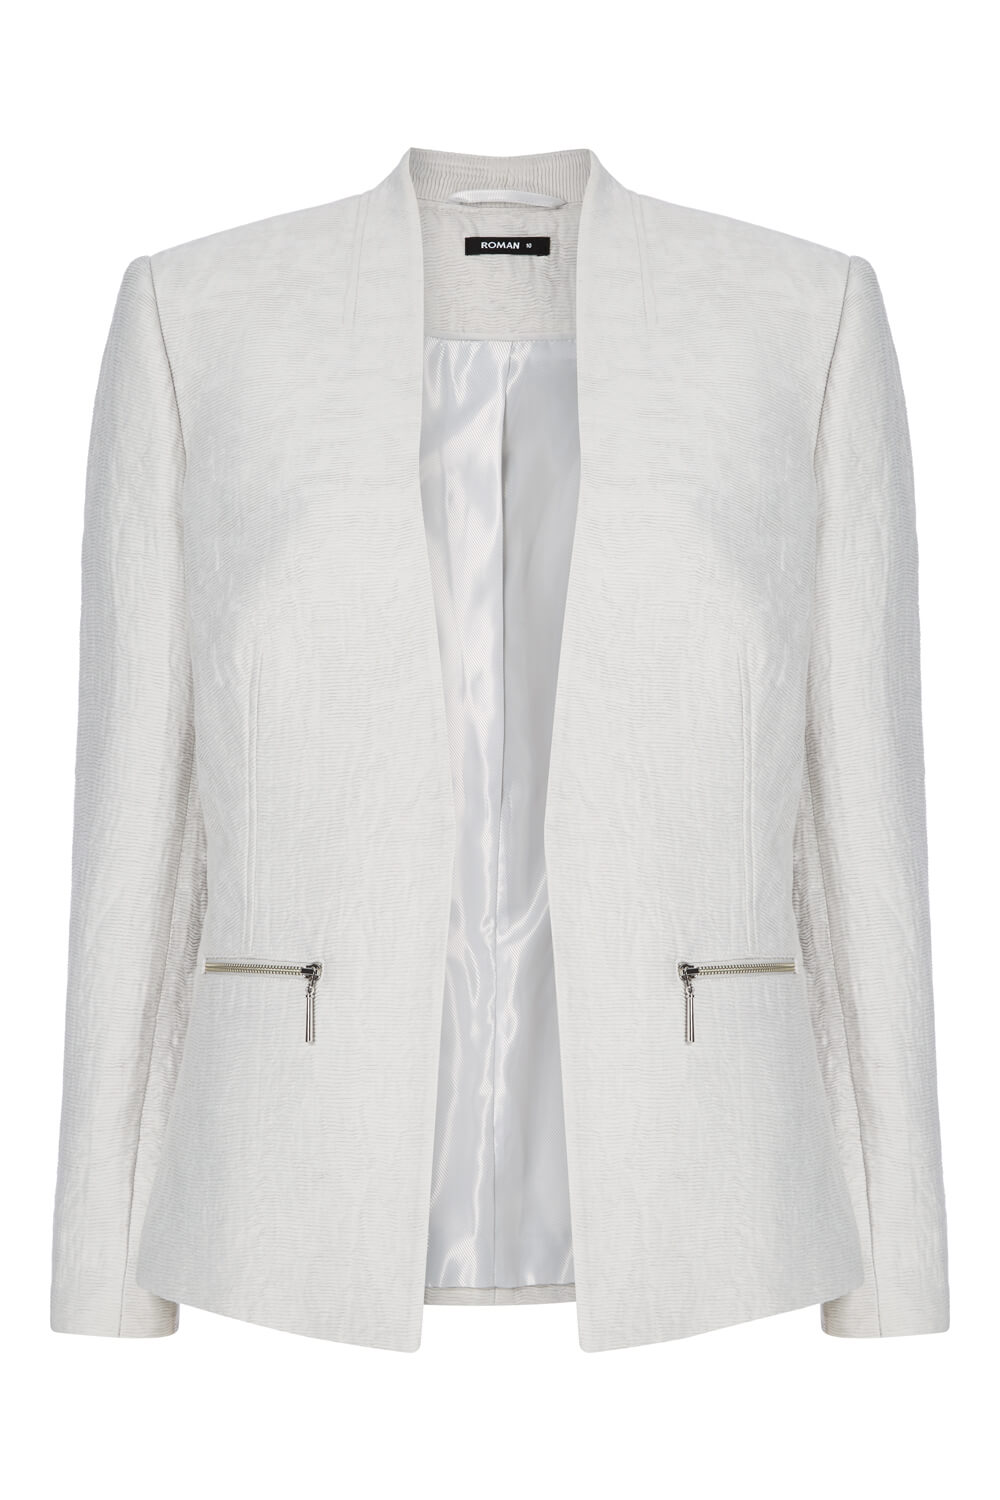 Light Grey Pleat Tailored Jacket, Image 5 of 5